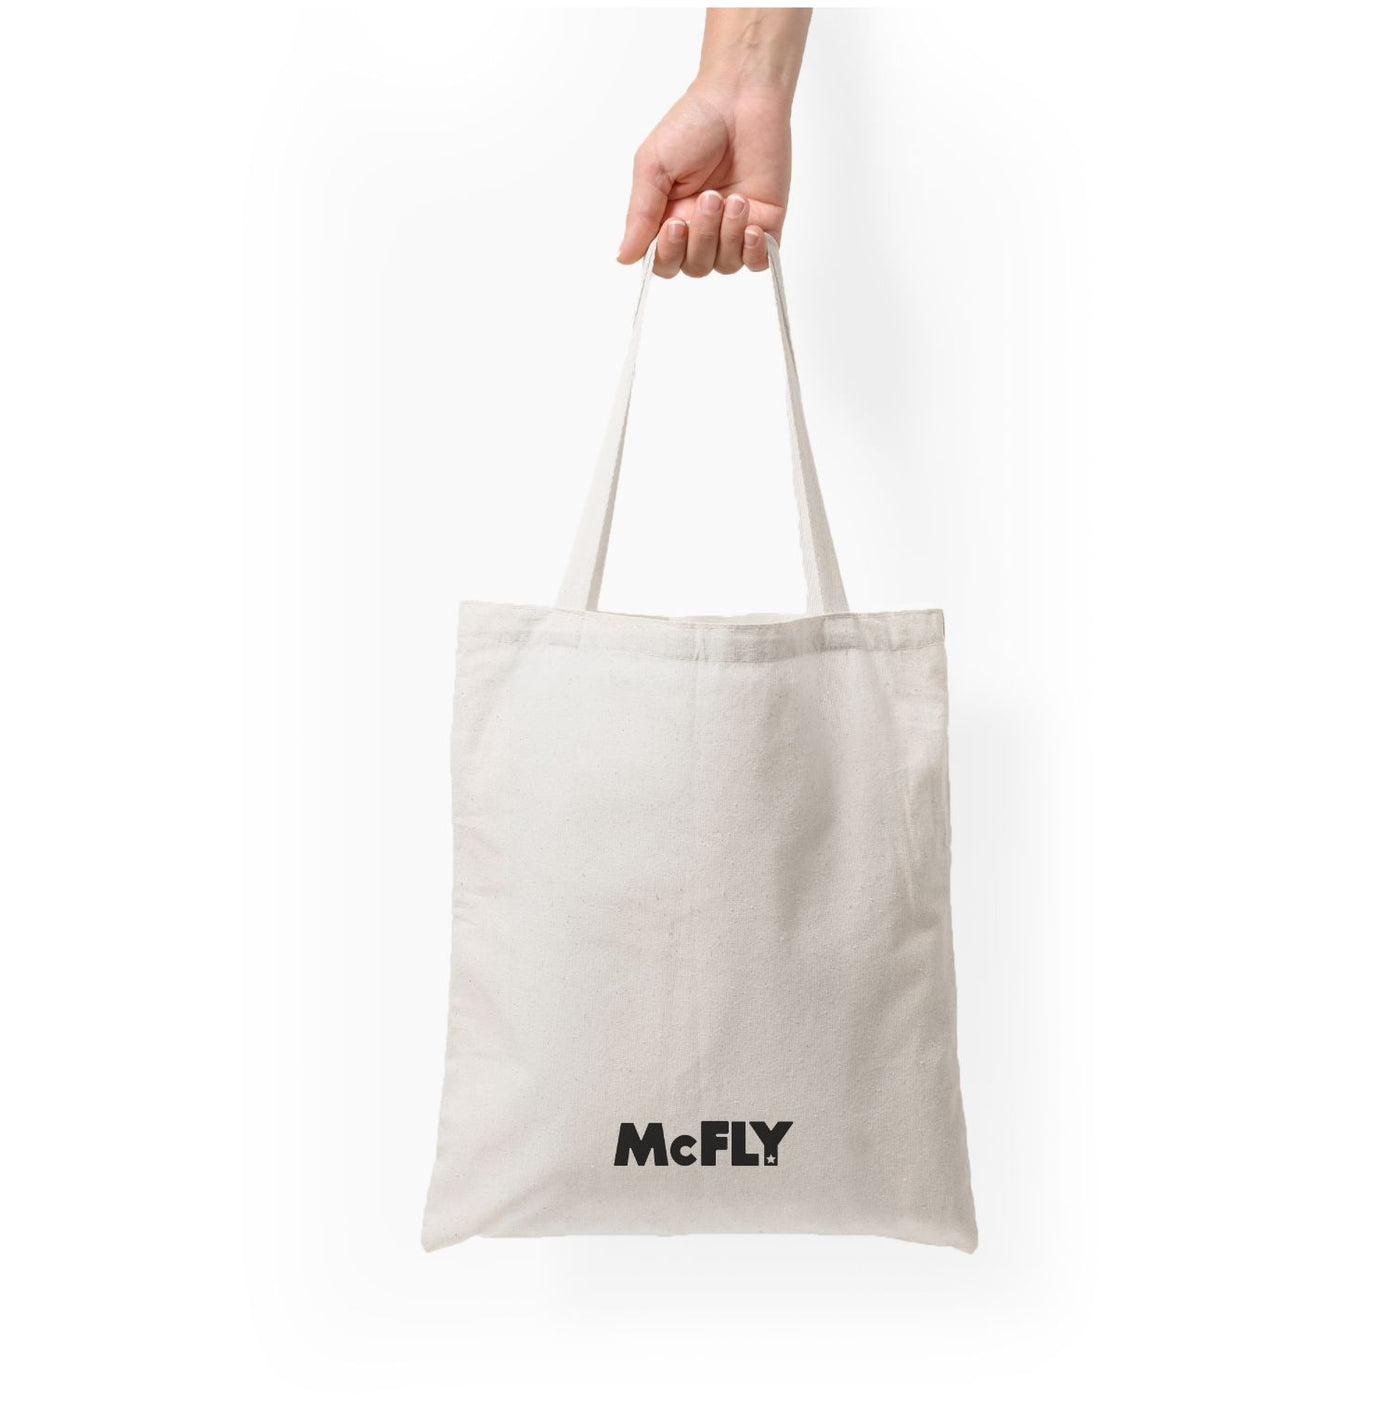 Green - McFly Tote Bag